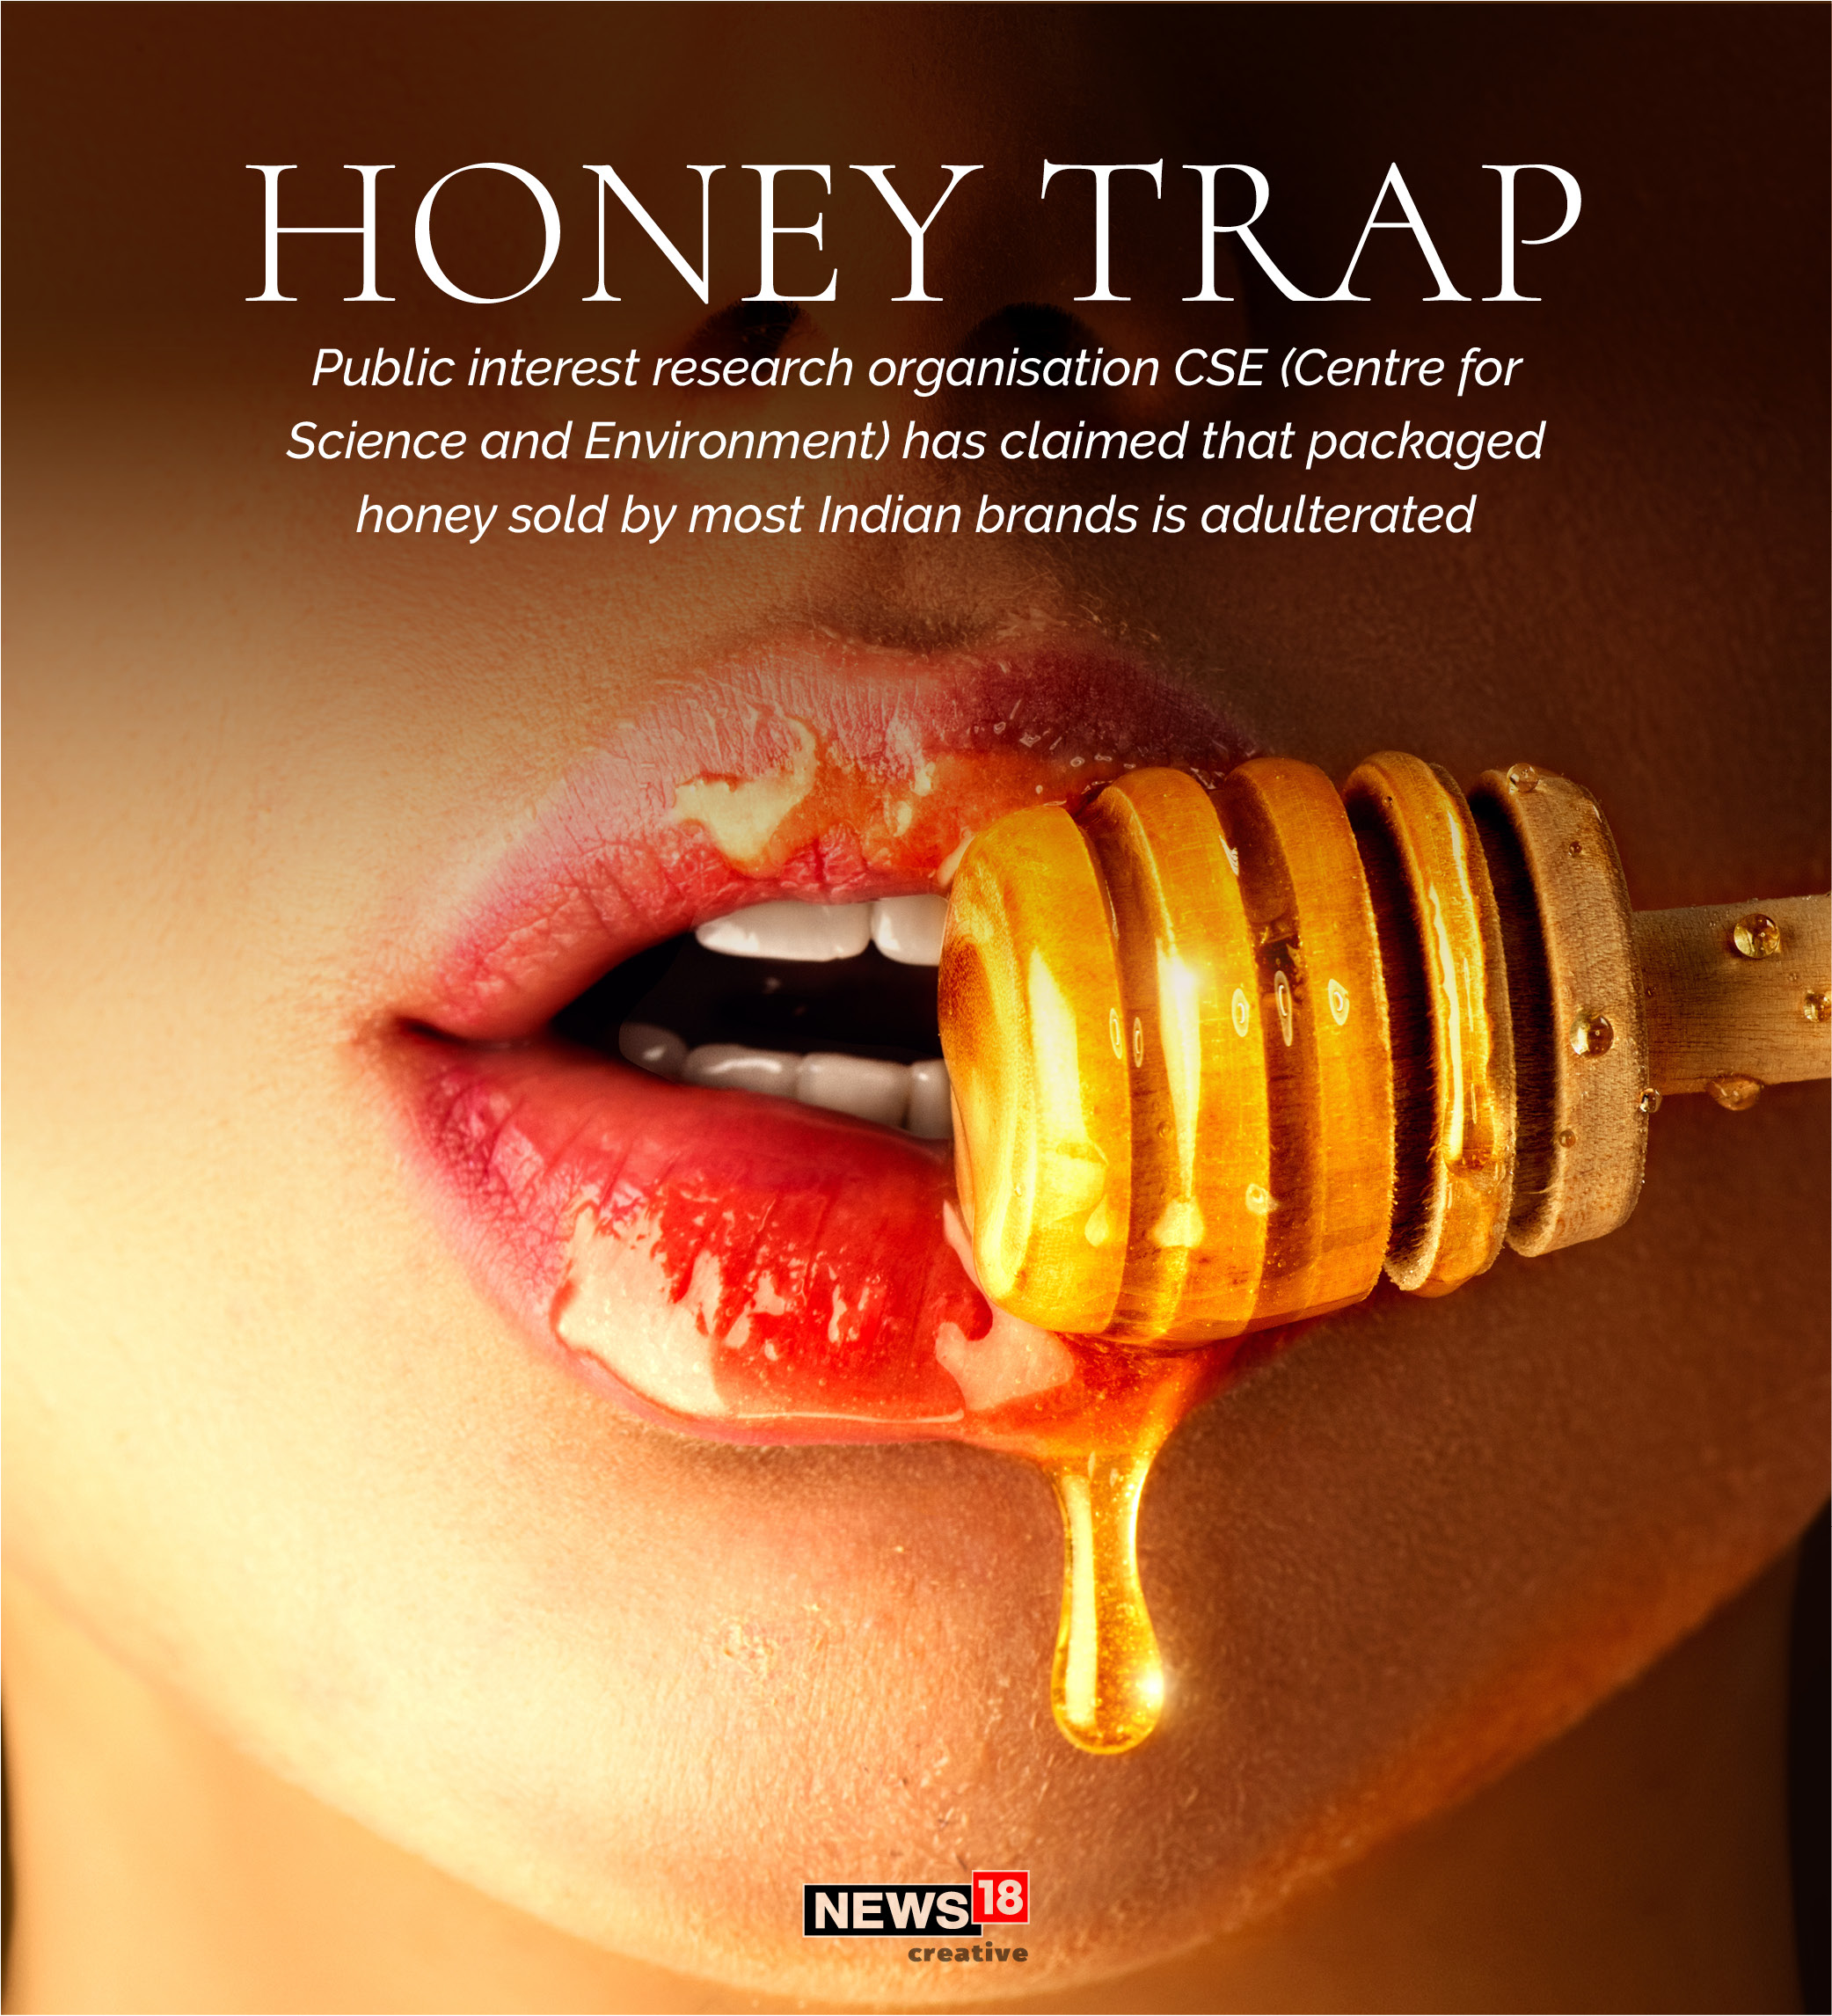 1607001079_honey-trap.jpg?impolicy=websi